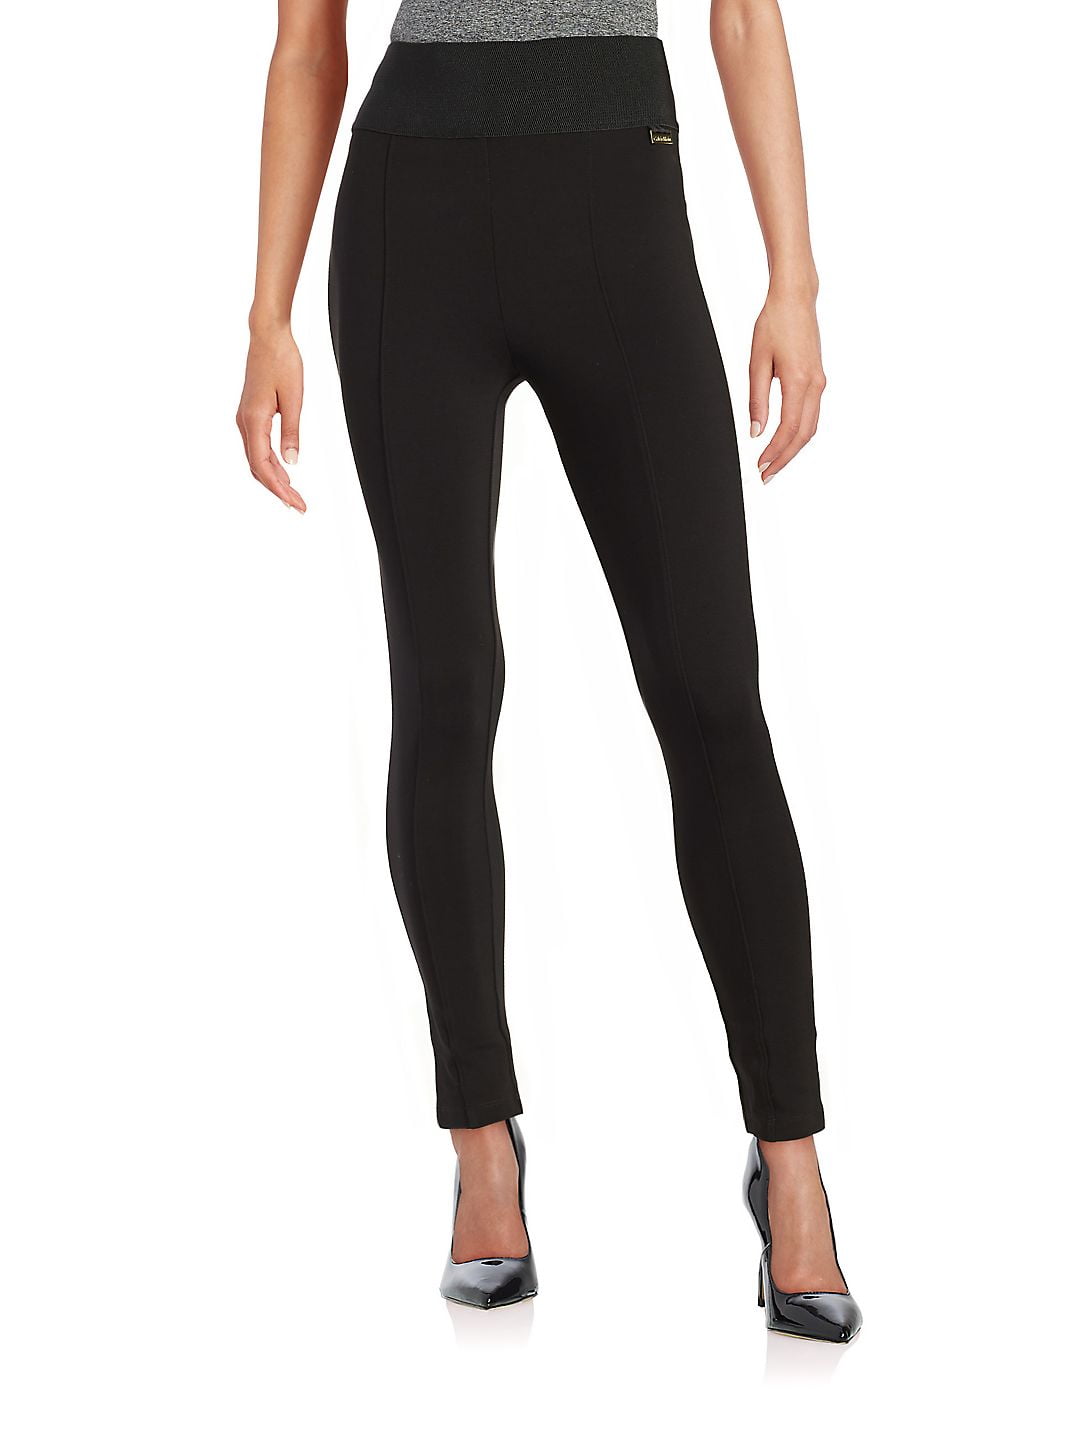 Calvin Klein Womens Ponte Power Stretch Dress Pants Black M - Walmart.com